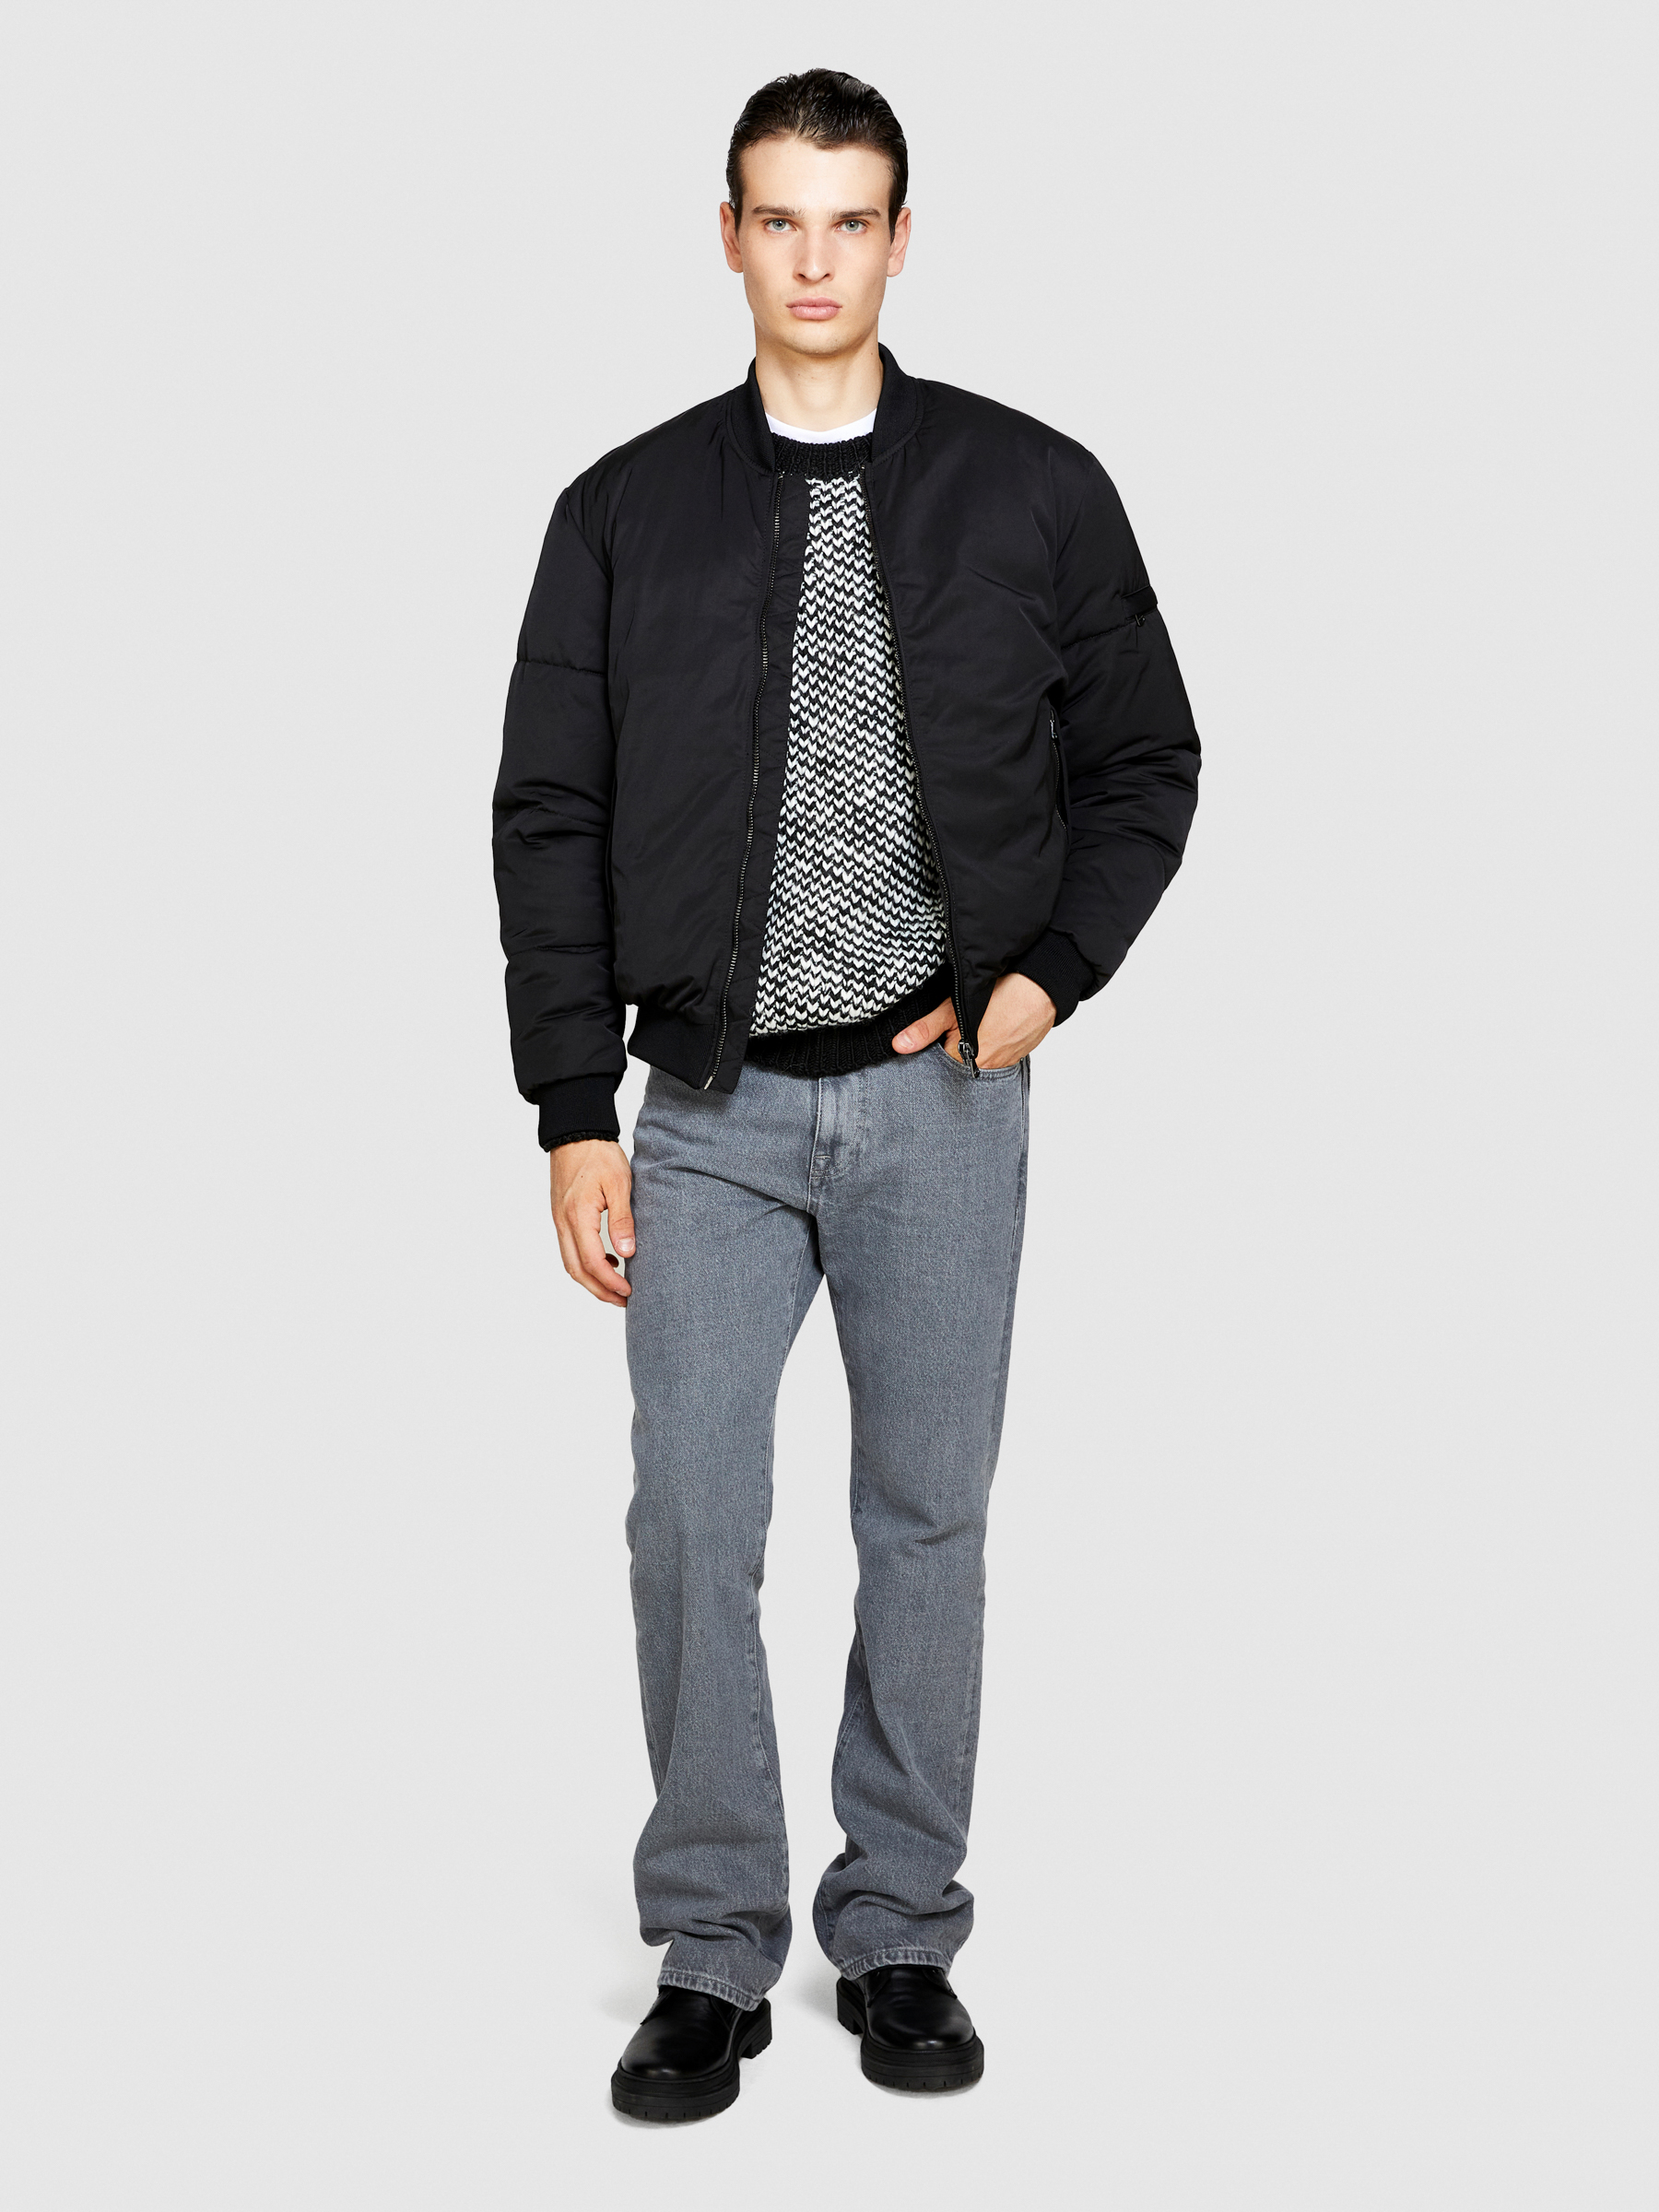 Sisley - Two-tone Sweater, Man, Black, Size: S